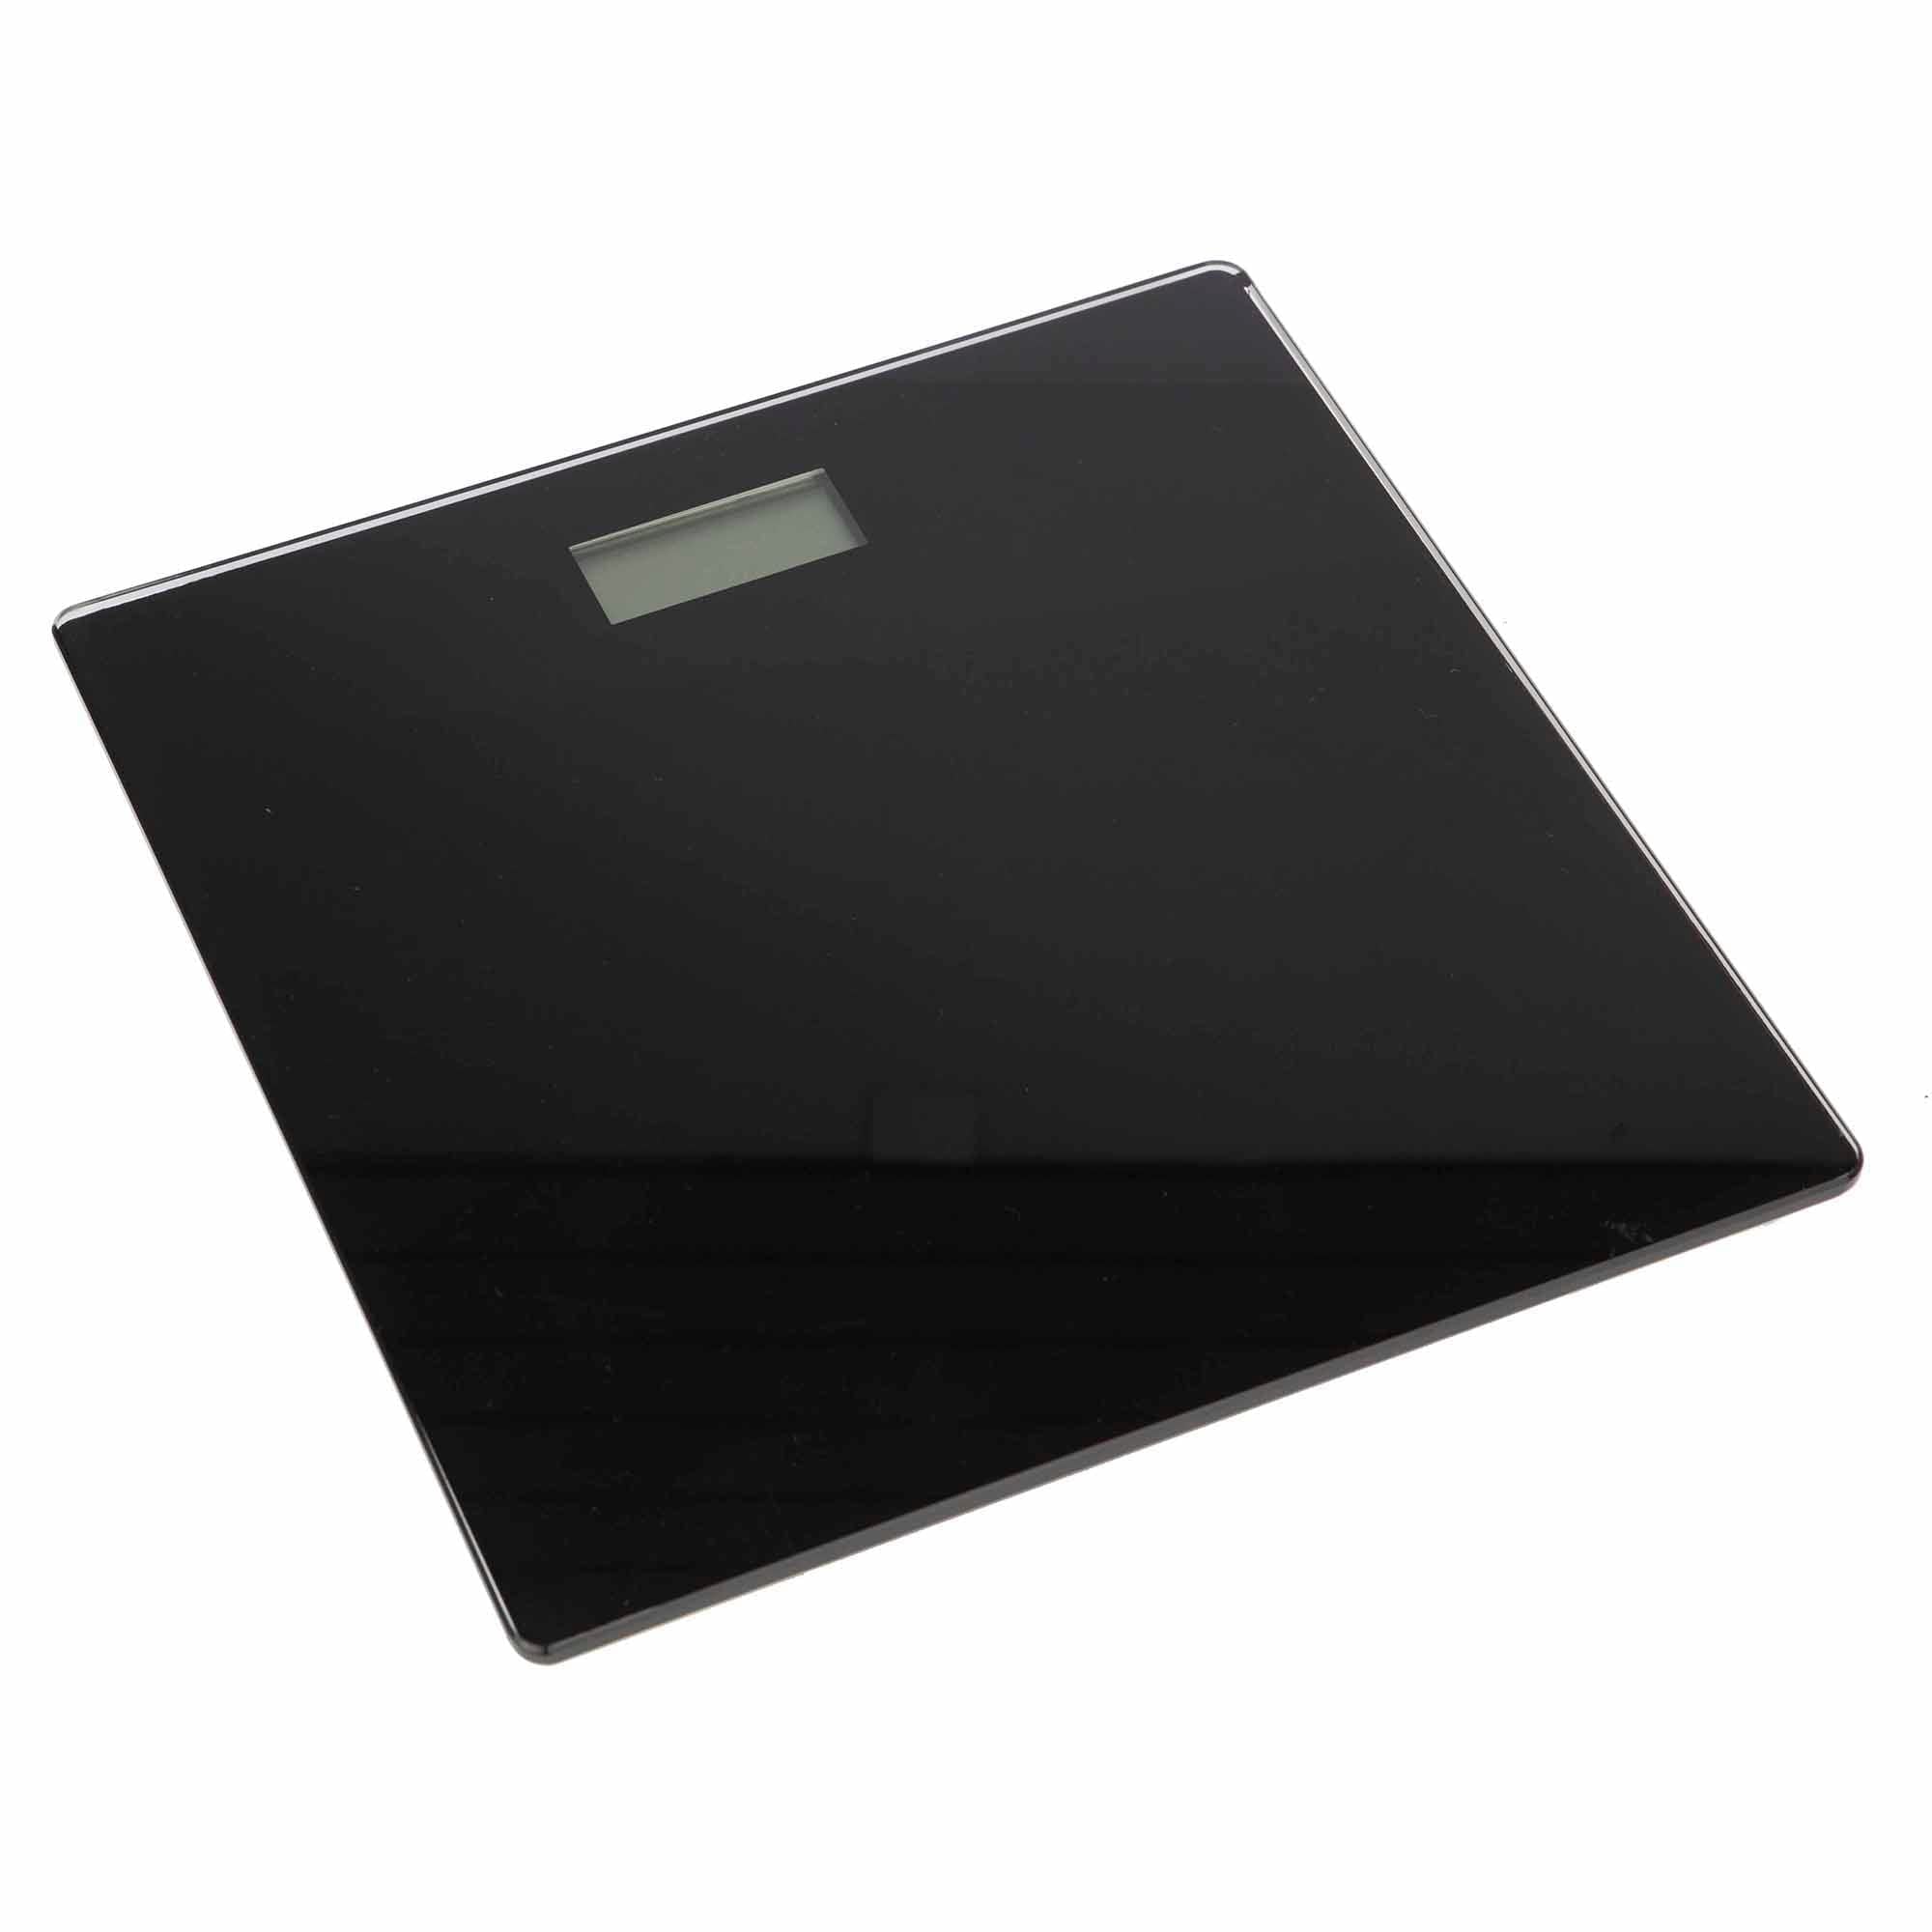 Home Basics Contemporary Sleek LCD Display Digital Glass Bathroom Scale, Black $10.00 EACH, CASE PACK OF 6